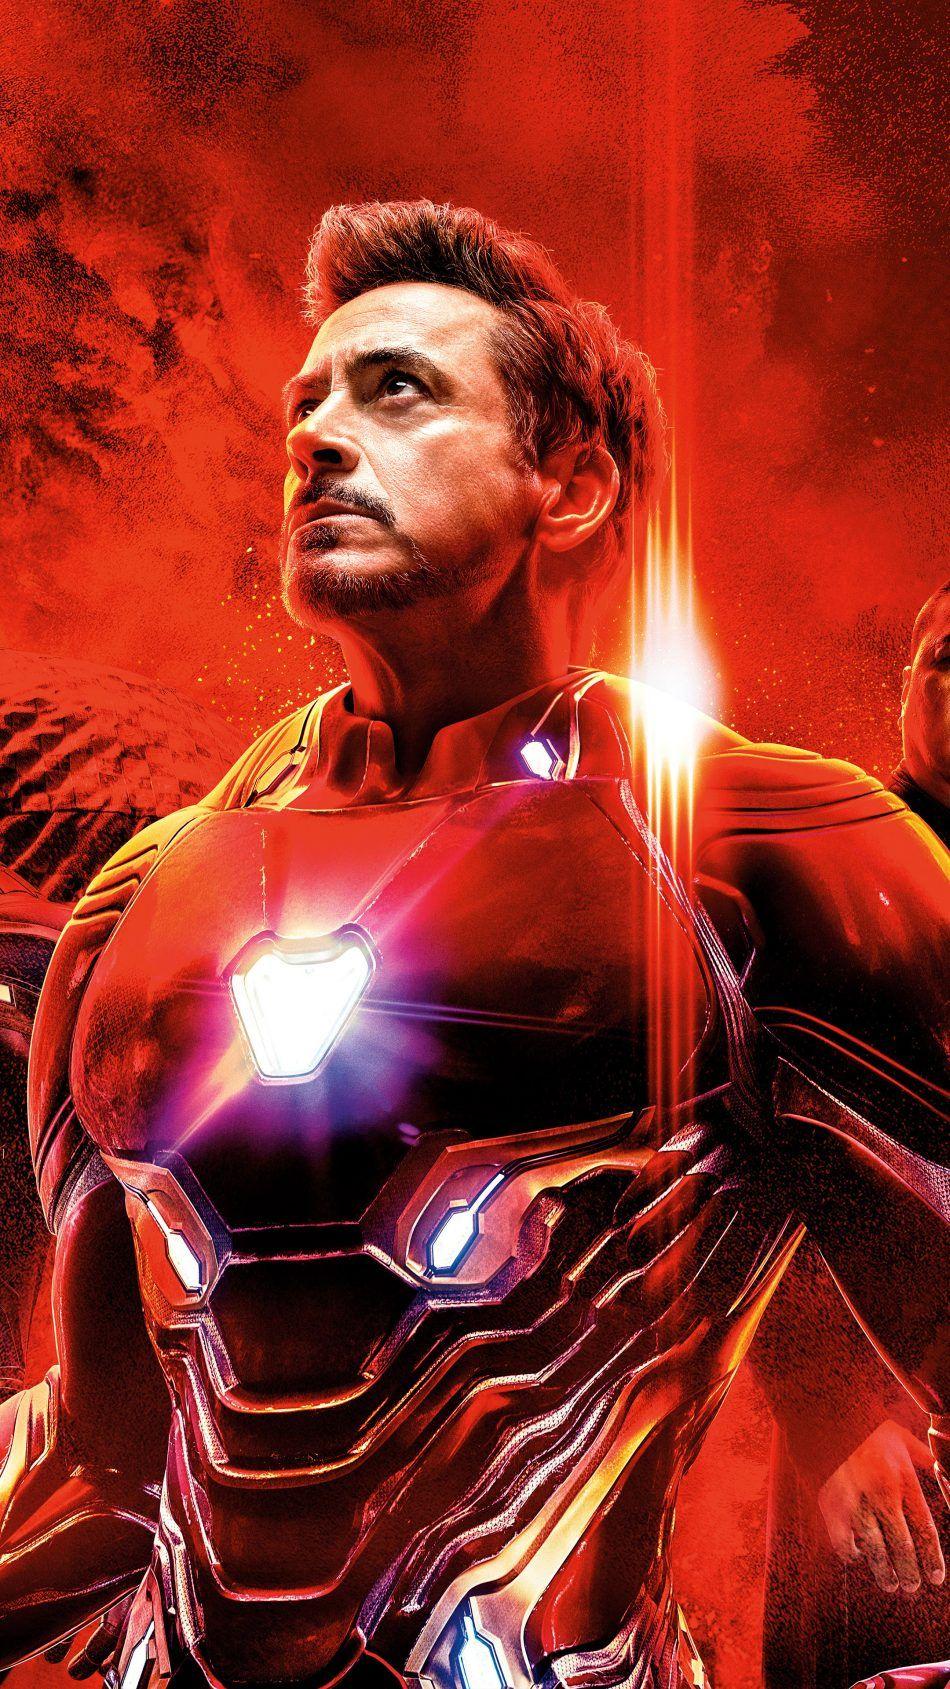 Iron Man In Avengers Endgame. Iron man poster, Iron man wallpaper